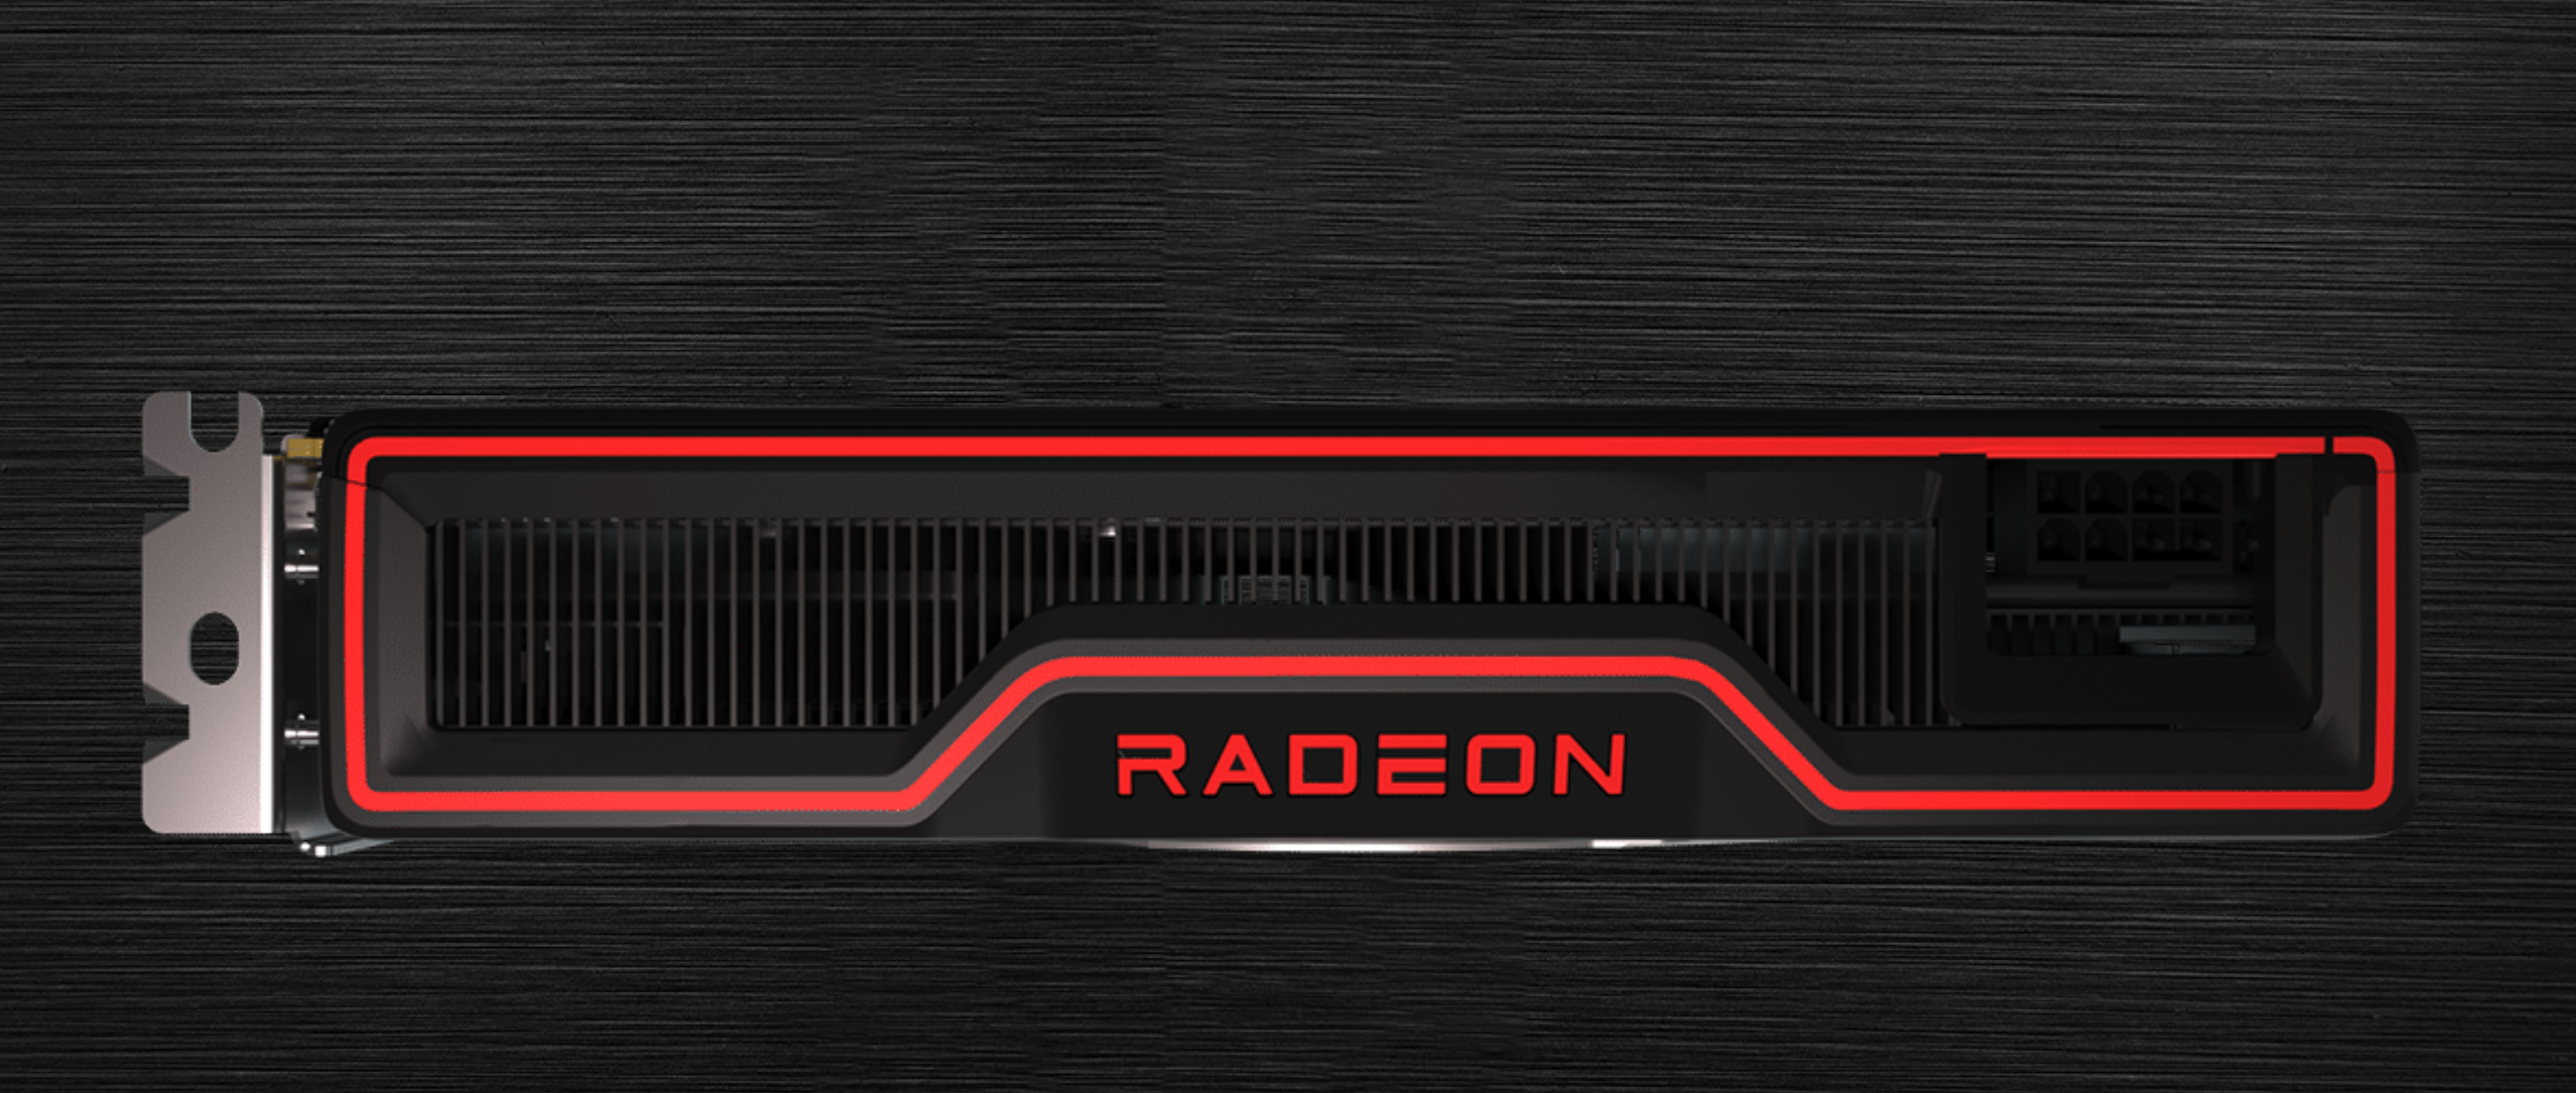 AMD Radeon RX 6600 XT显卡装机配置方案推荐，CPU推荐搭配AMD 5600X或 